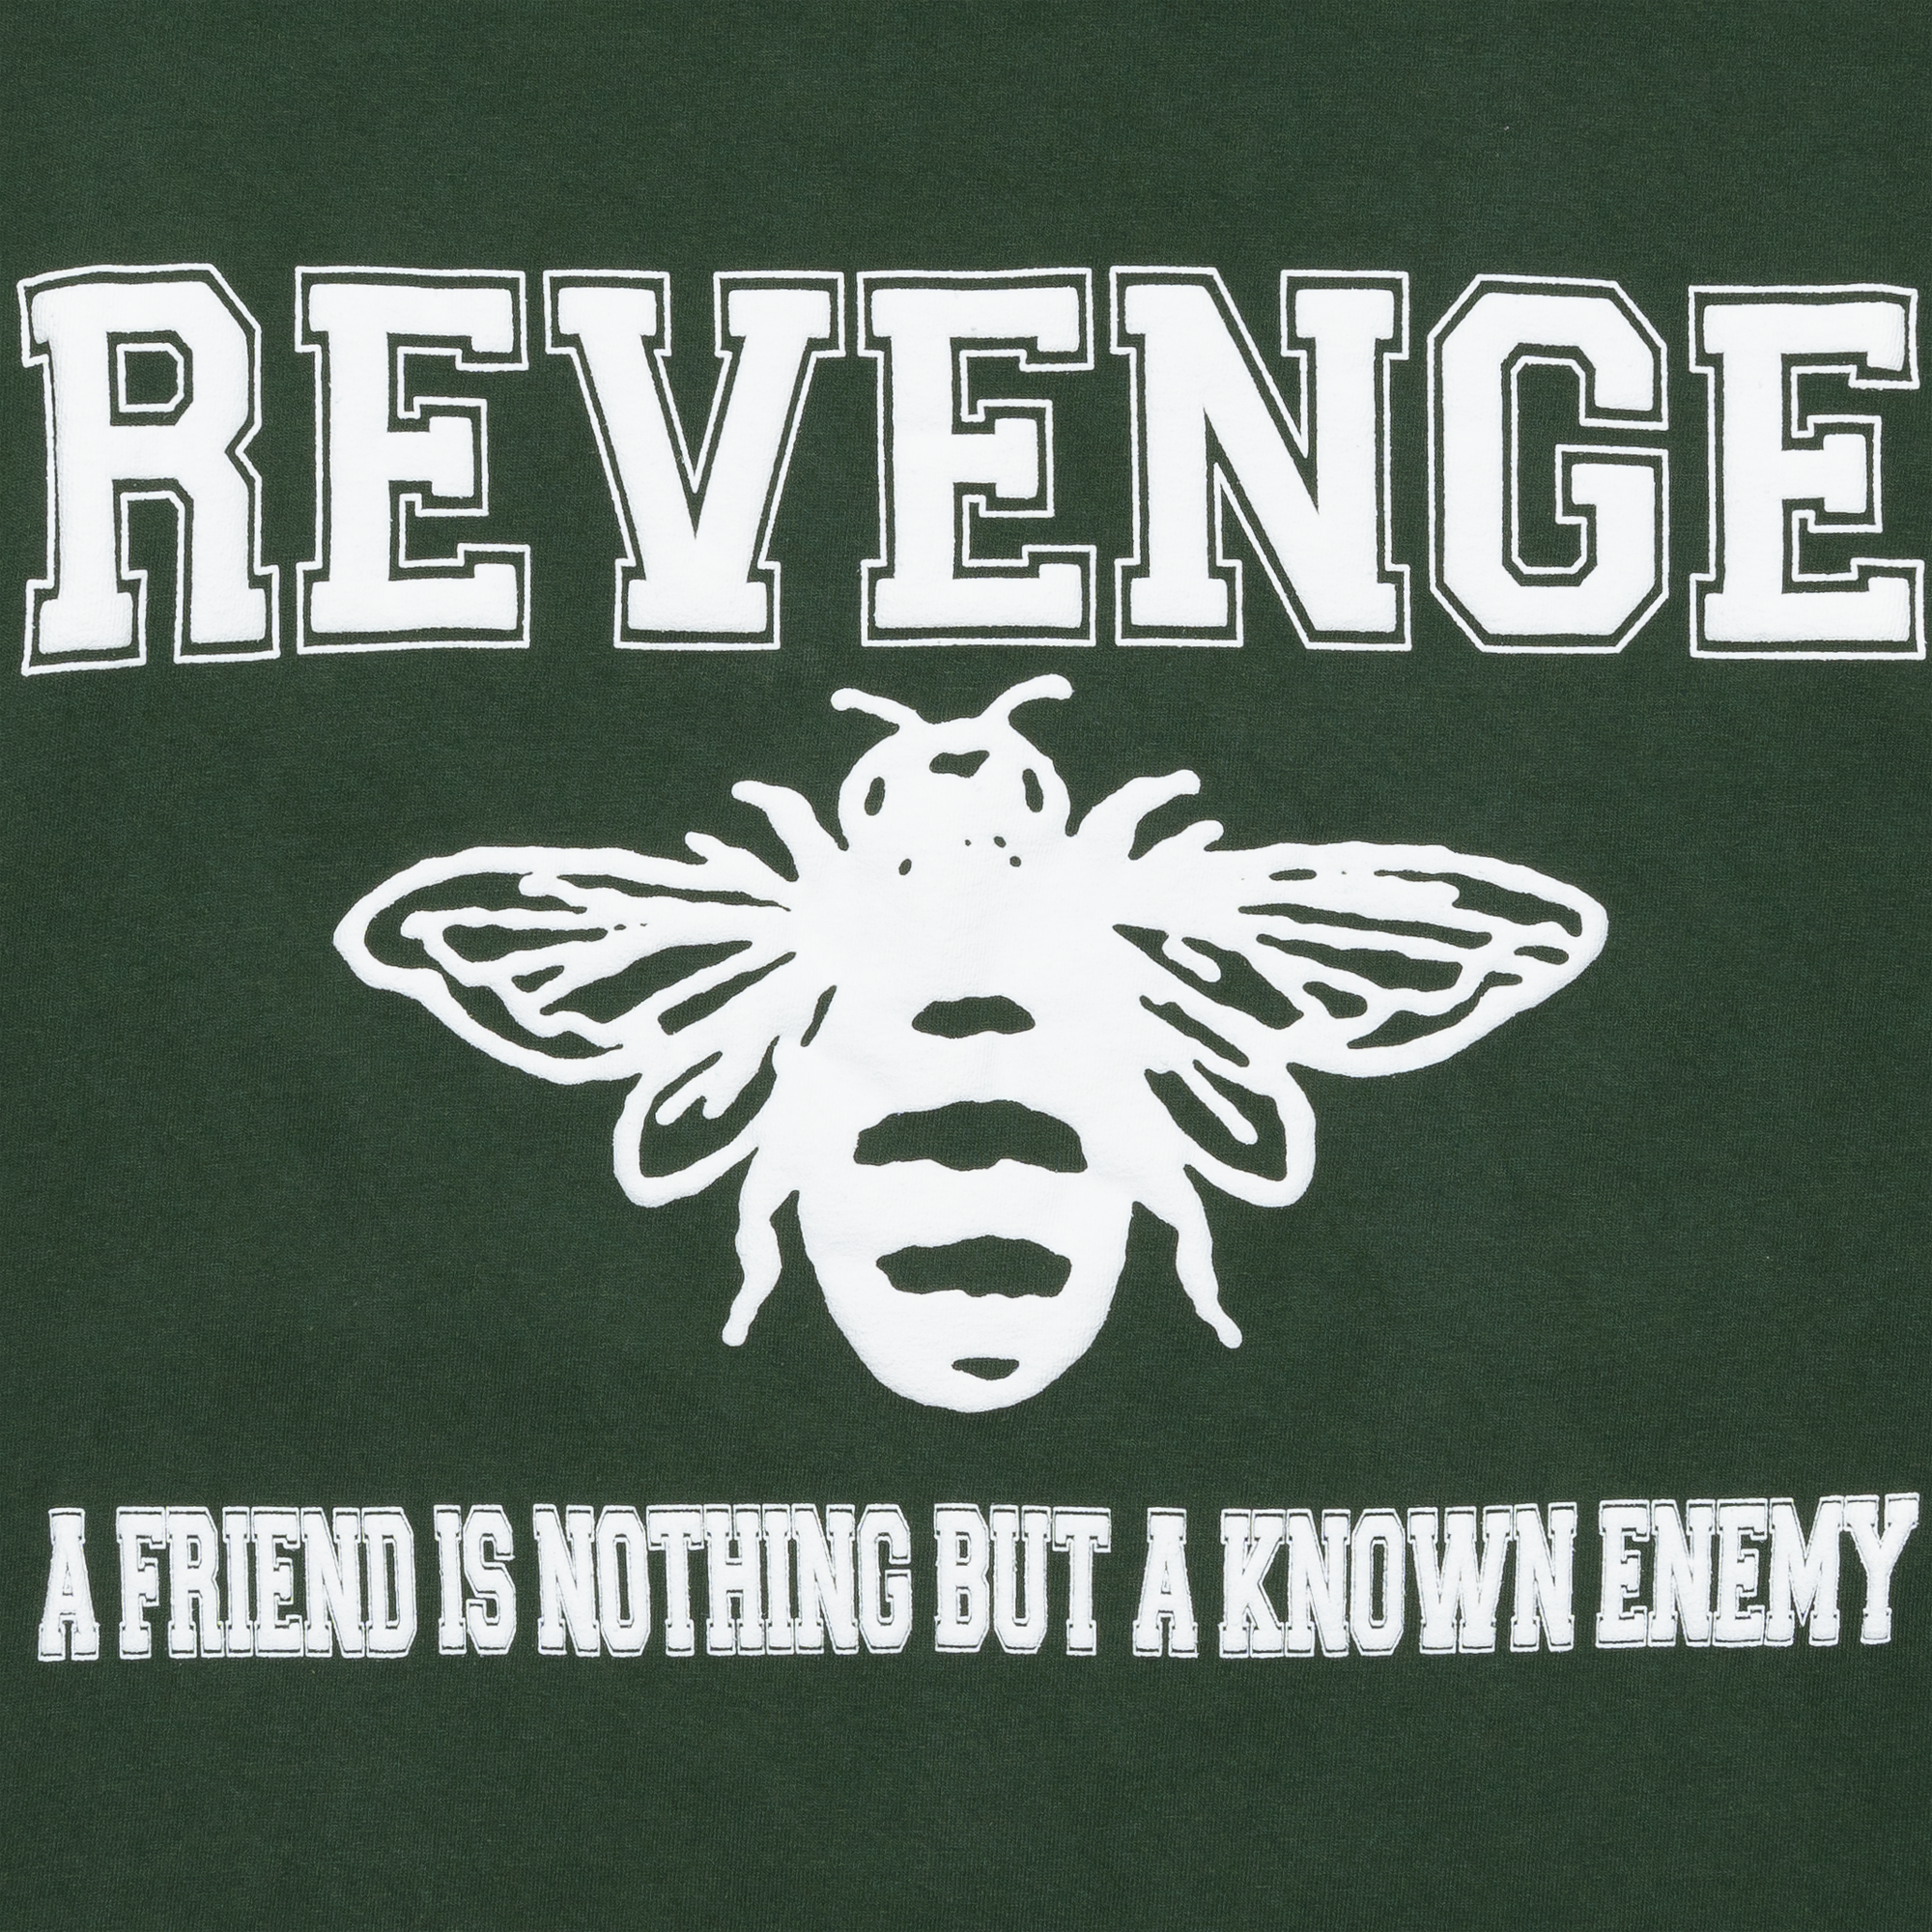 Revenge Friends Tee Forest Green Ivy-PLUS